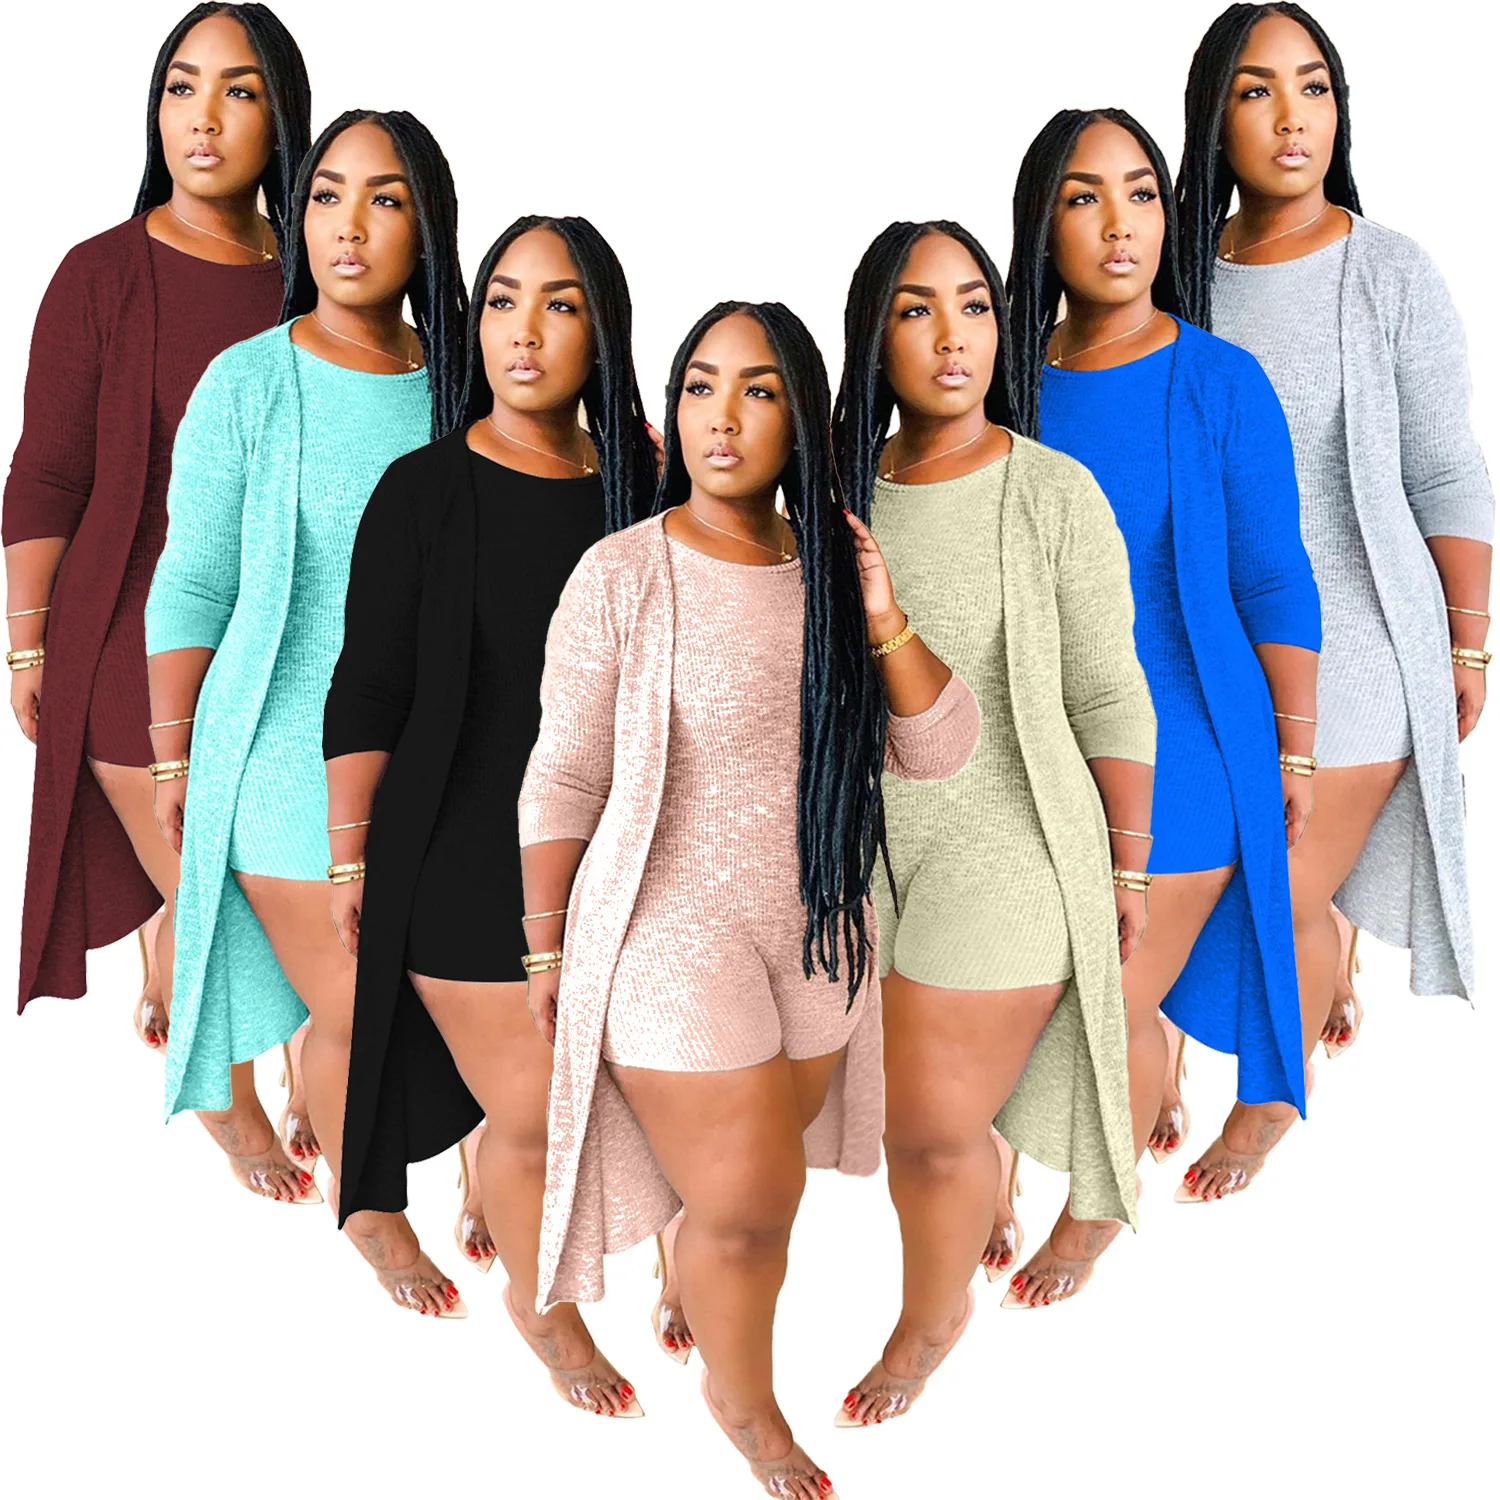 

2021 New Arrivals Plain Ribbed Causal T-shirt Jumpsuit&Long Sleeves Coat Two Piece Set Plus Size Women Clothing 3xl 4xl 5xl, 7 different color